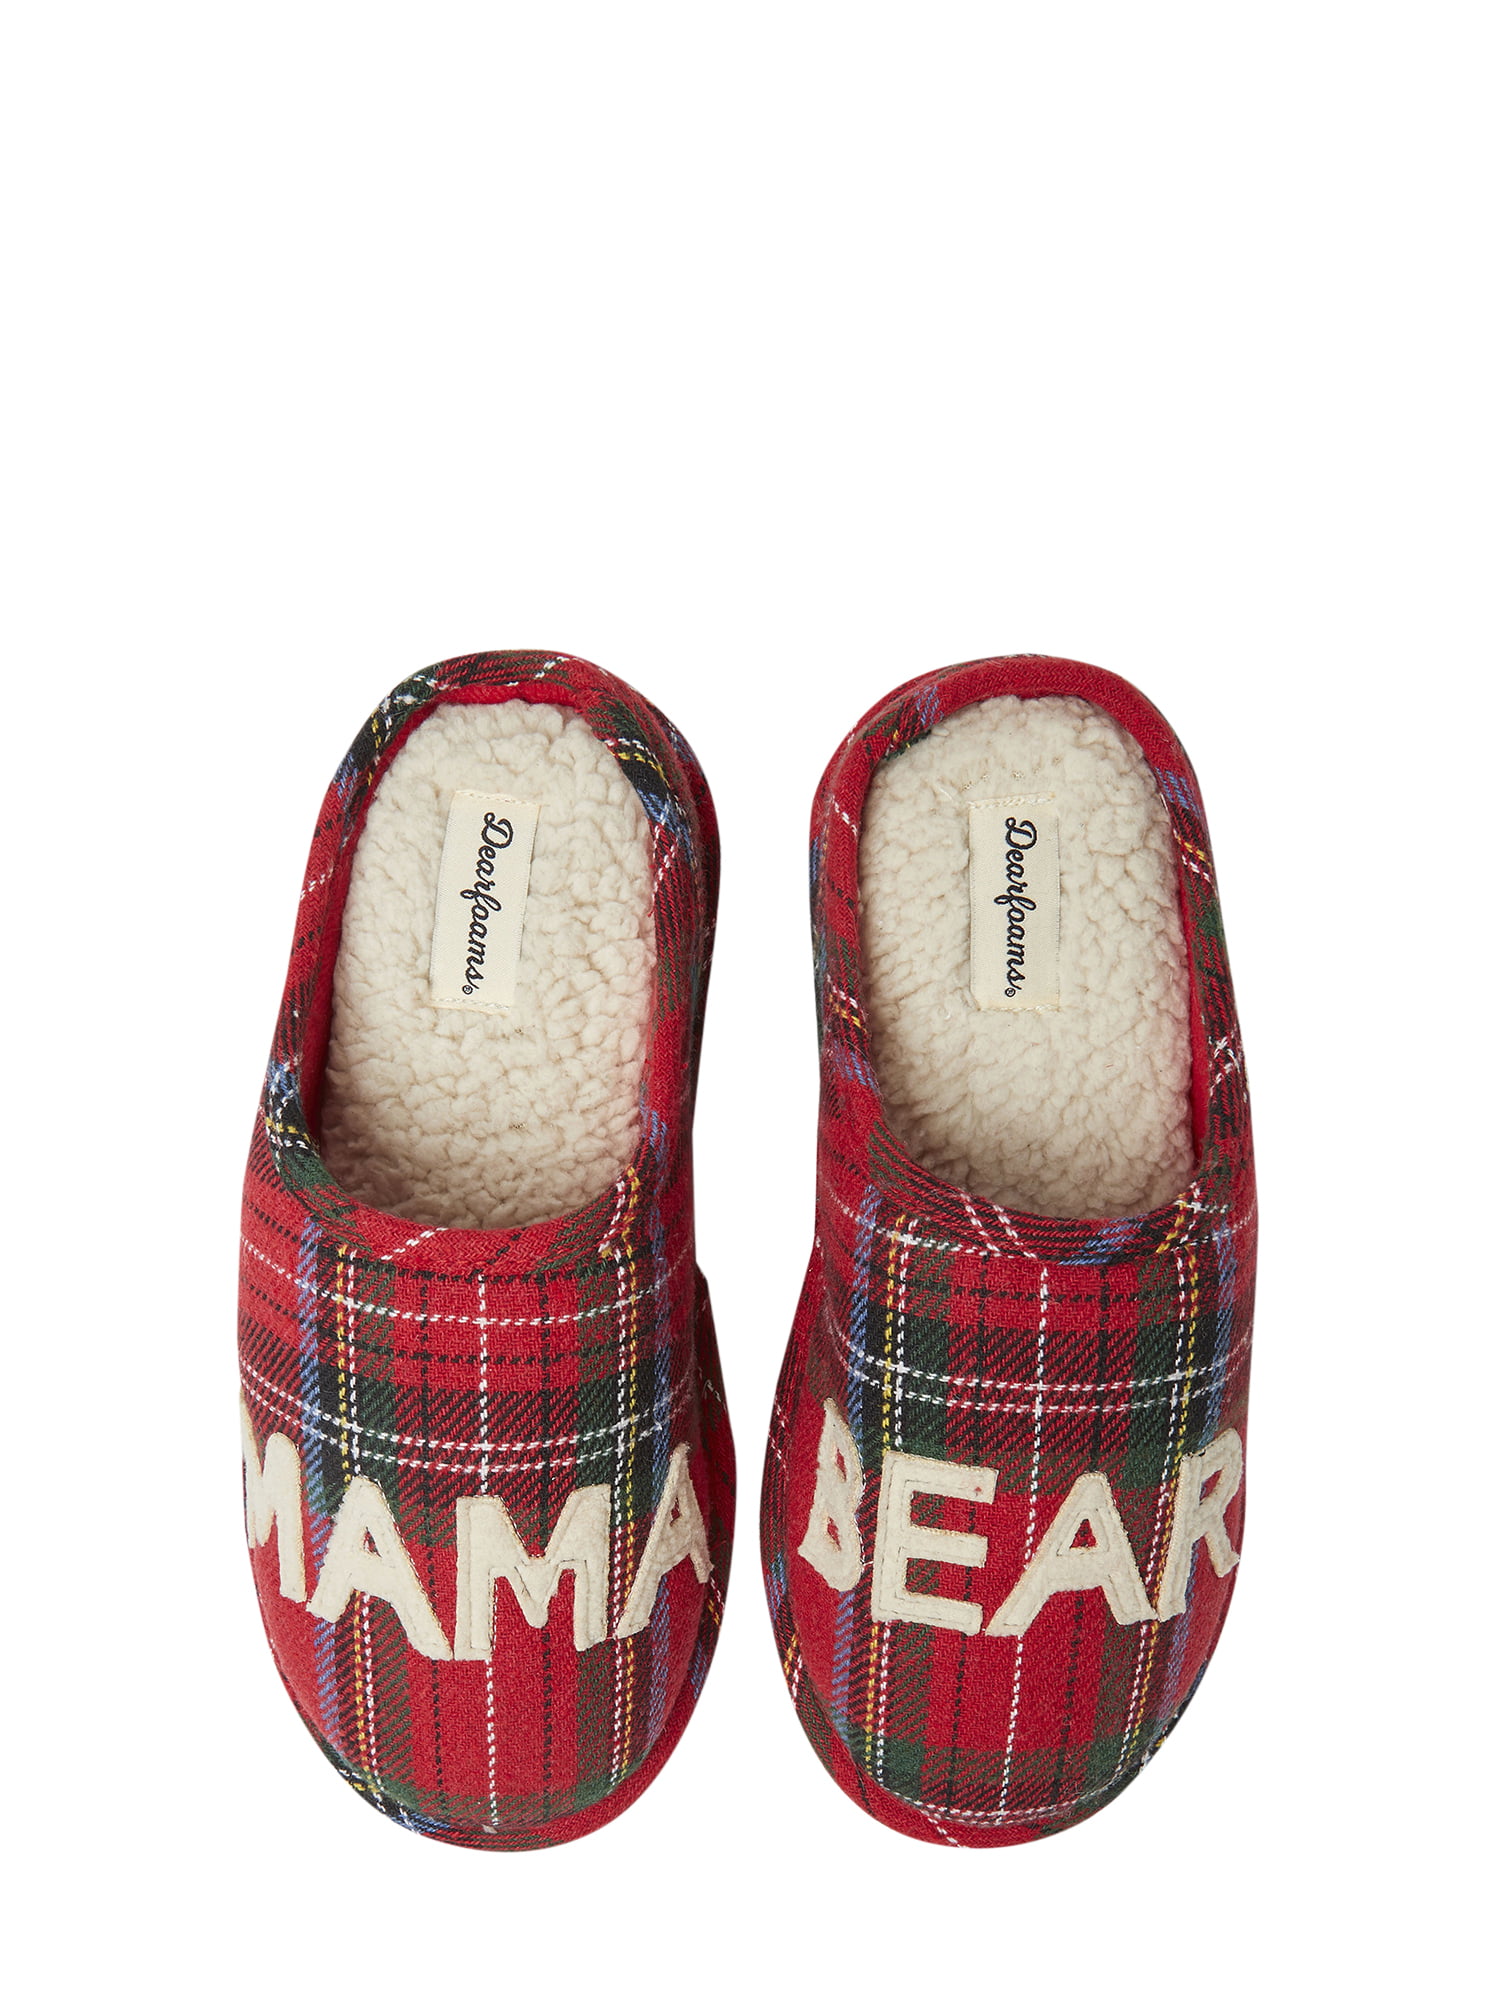 dearfoam slippers at walmart